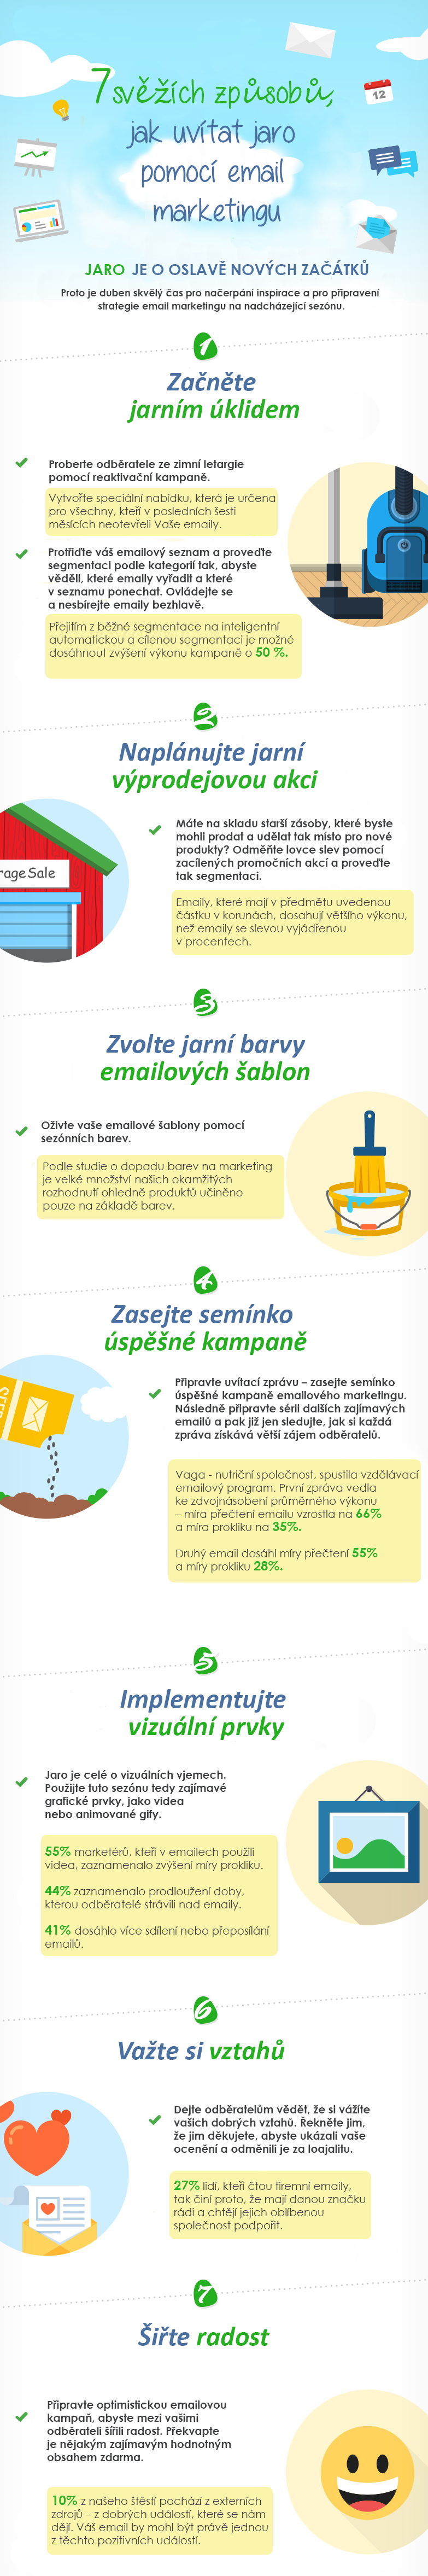 infografika_7_svezich_zpusobu_jak_uvitat_jaro_pomoci_emailoveho_marketingu